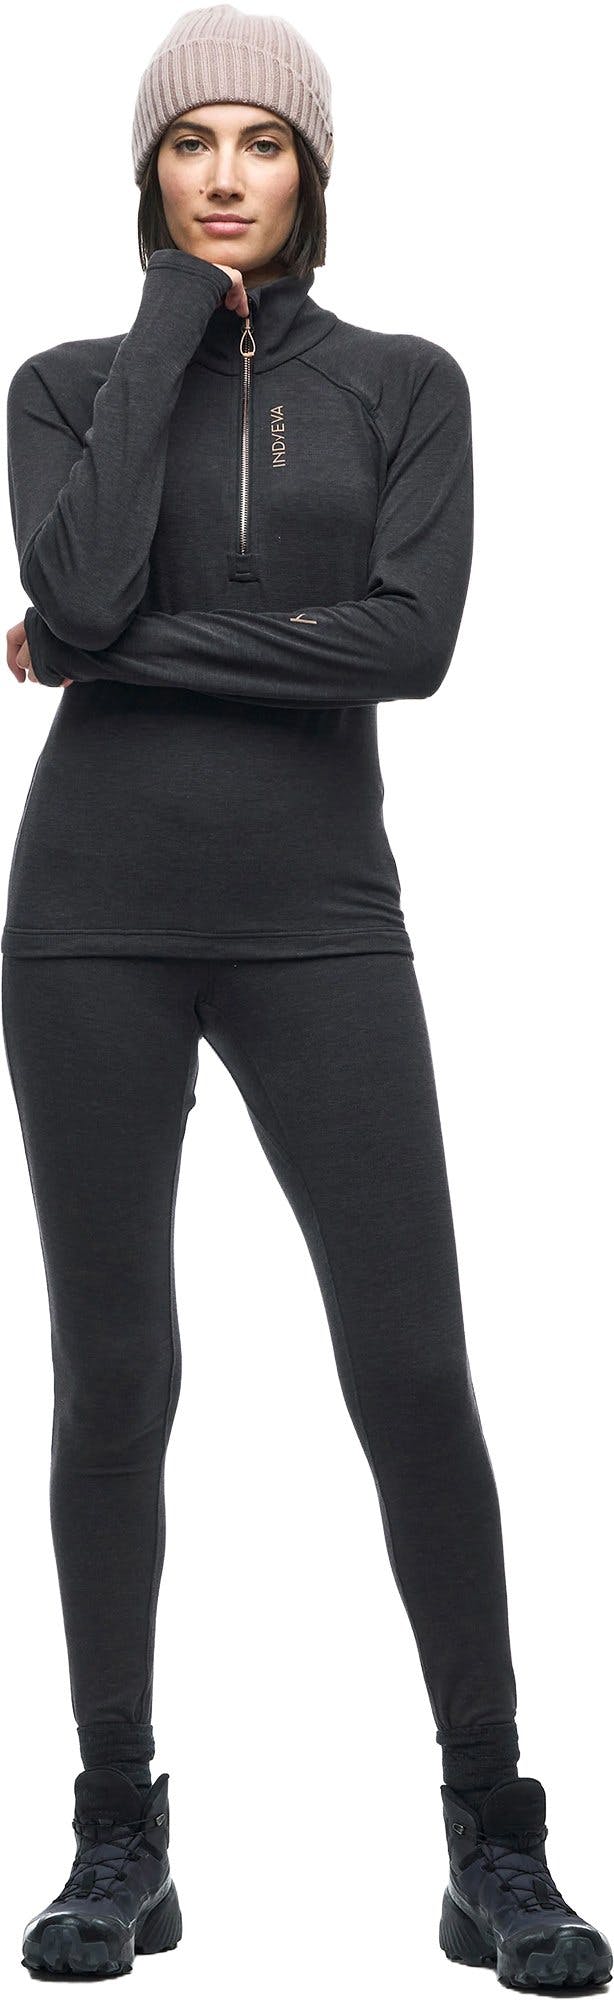 Product image for Leno Half-Zip Long Sleeve Sweater - Women's